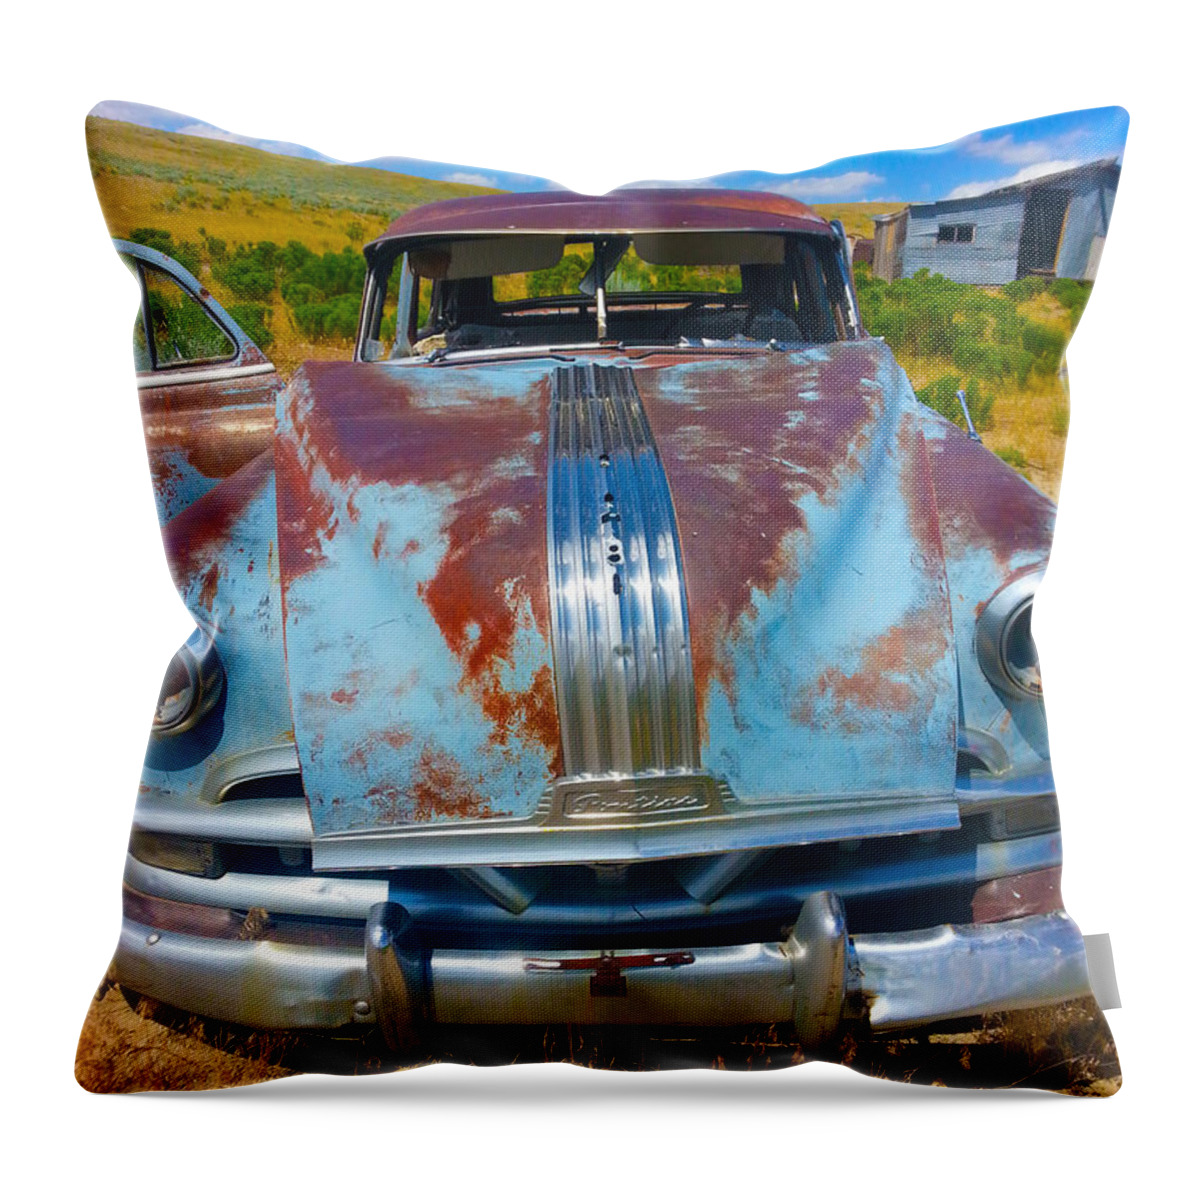 Pontiac Throw Pillow featuring the photograph Pontiac Blues by Amanda Smith